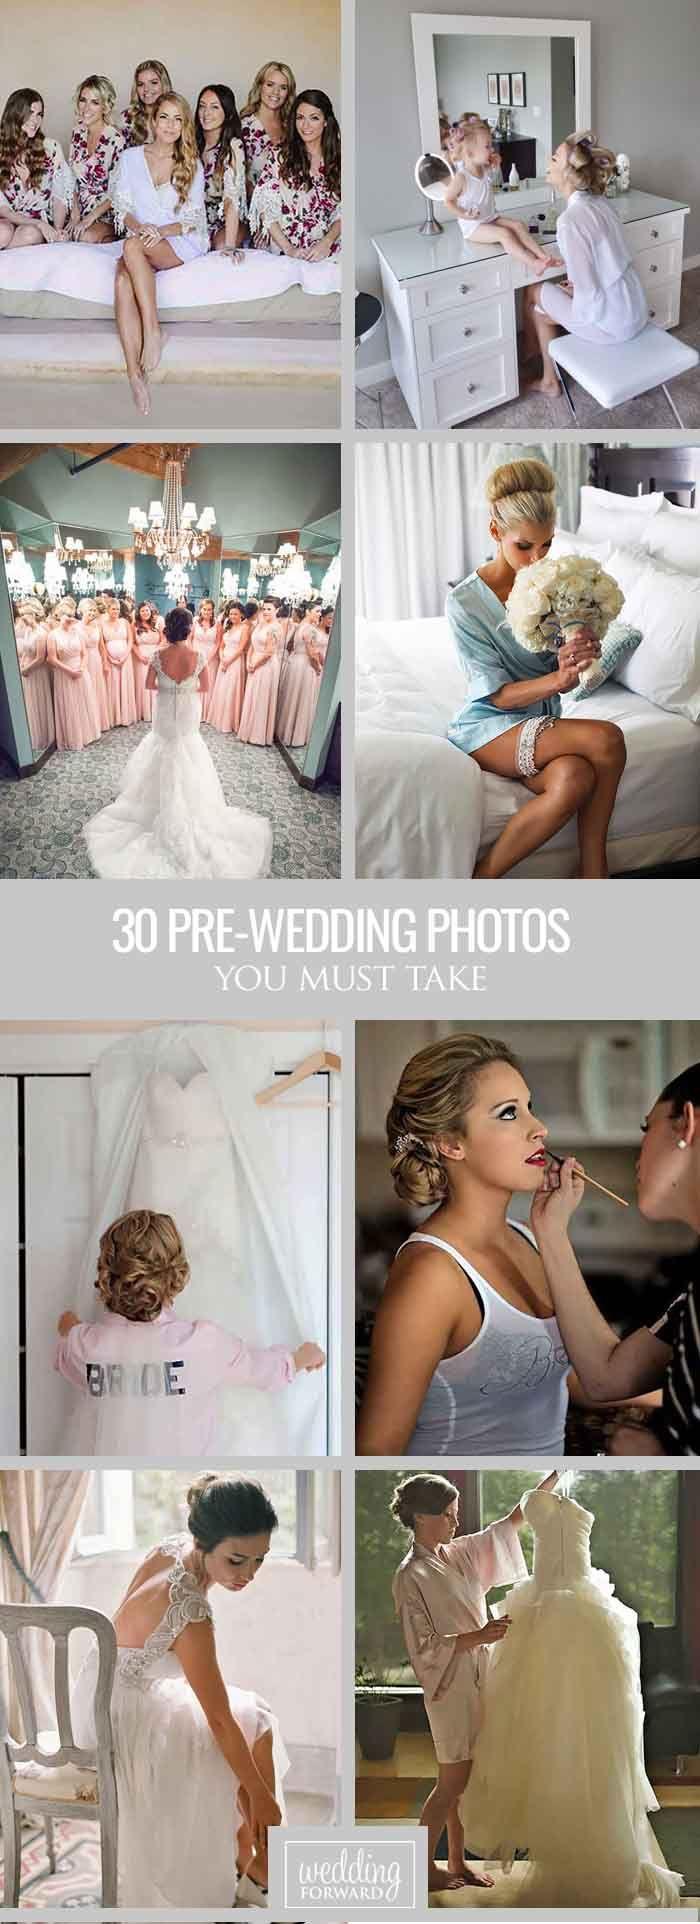 Wedding - 30 Must Take Pre-Wedding Photos